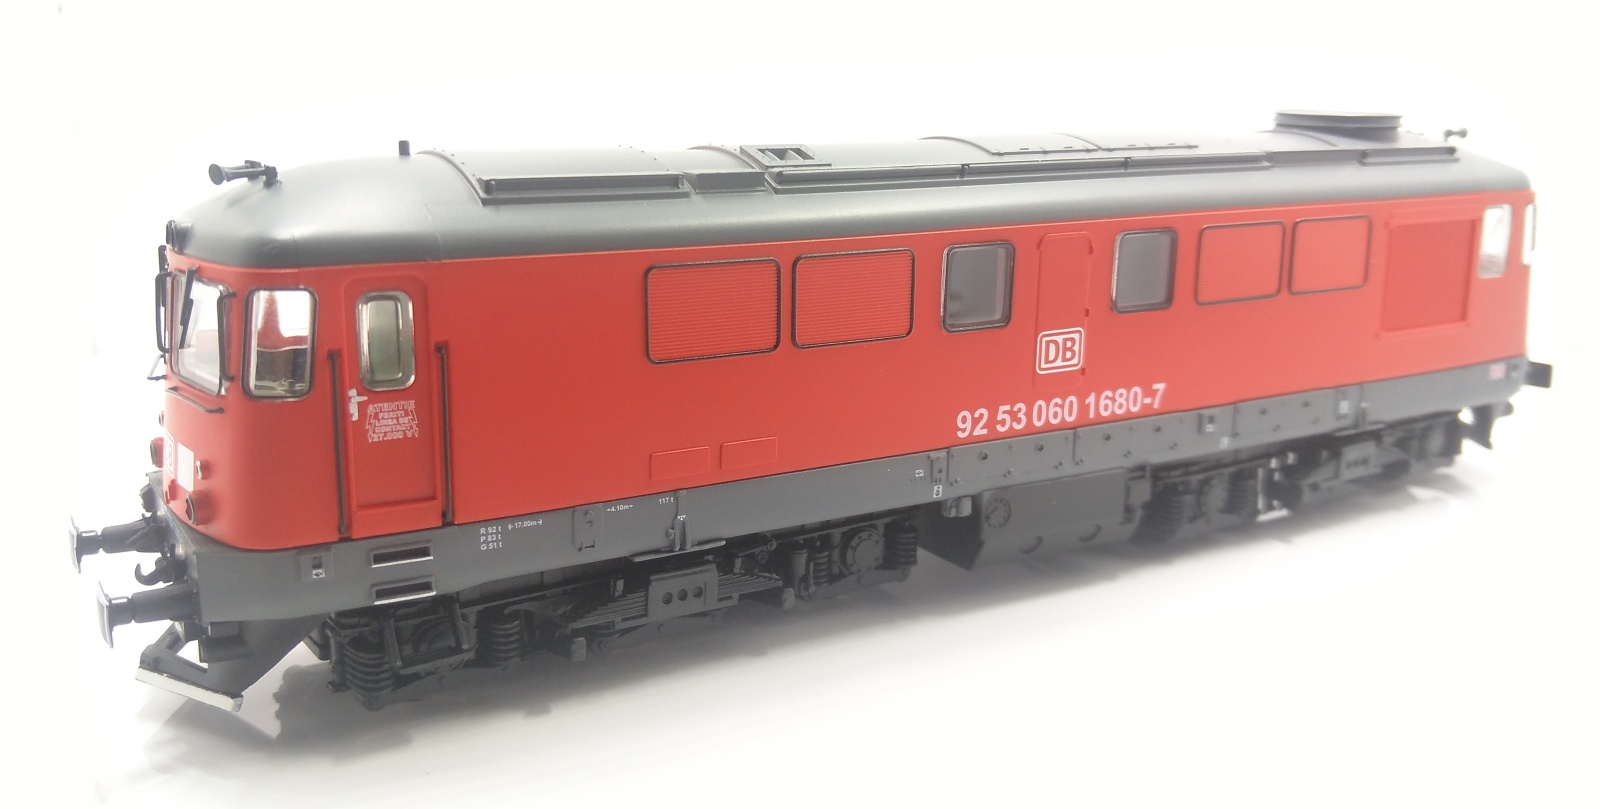 locomotiva-diesel-060-DA-DB-Schenker-Ro-albert-modell-060001-b.jpg